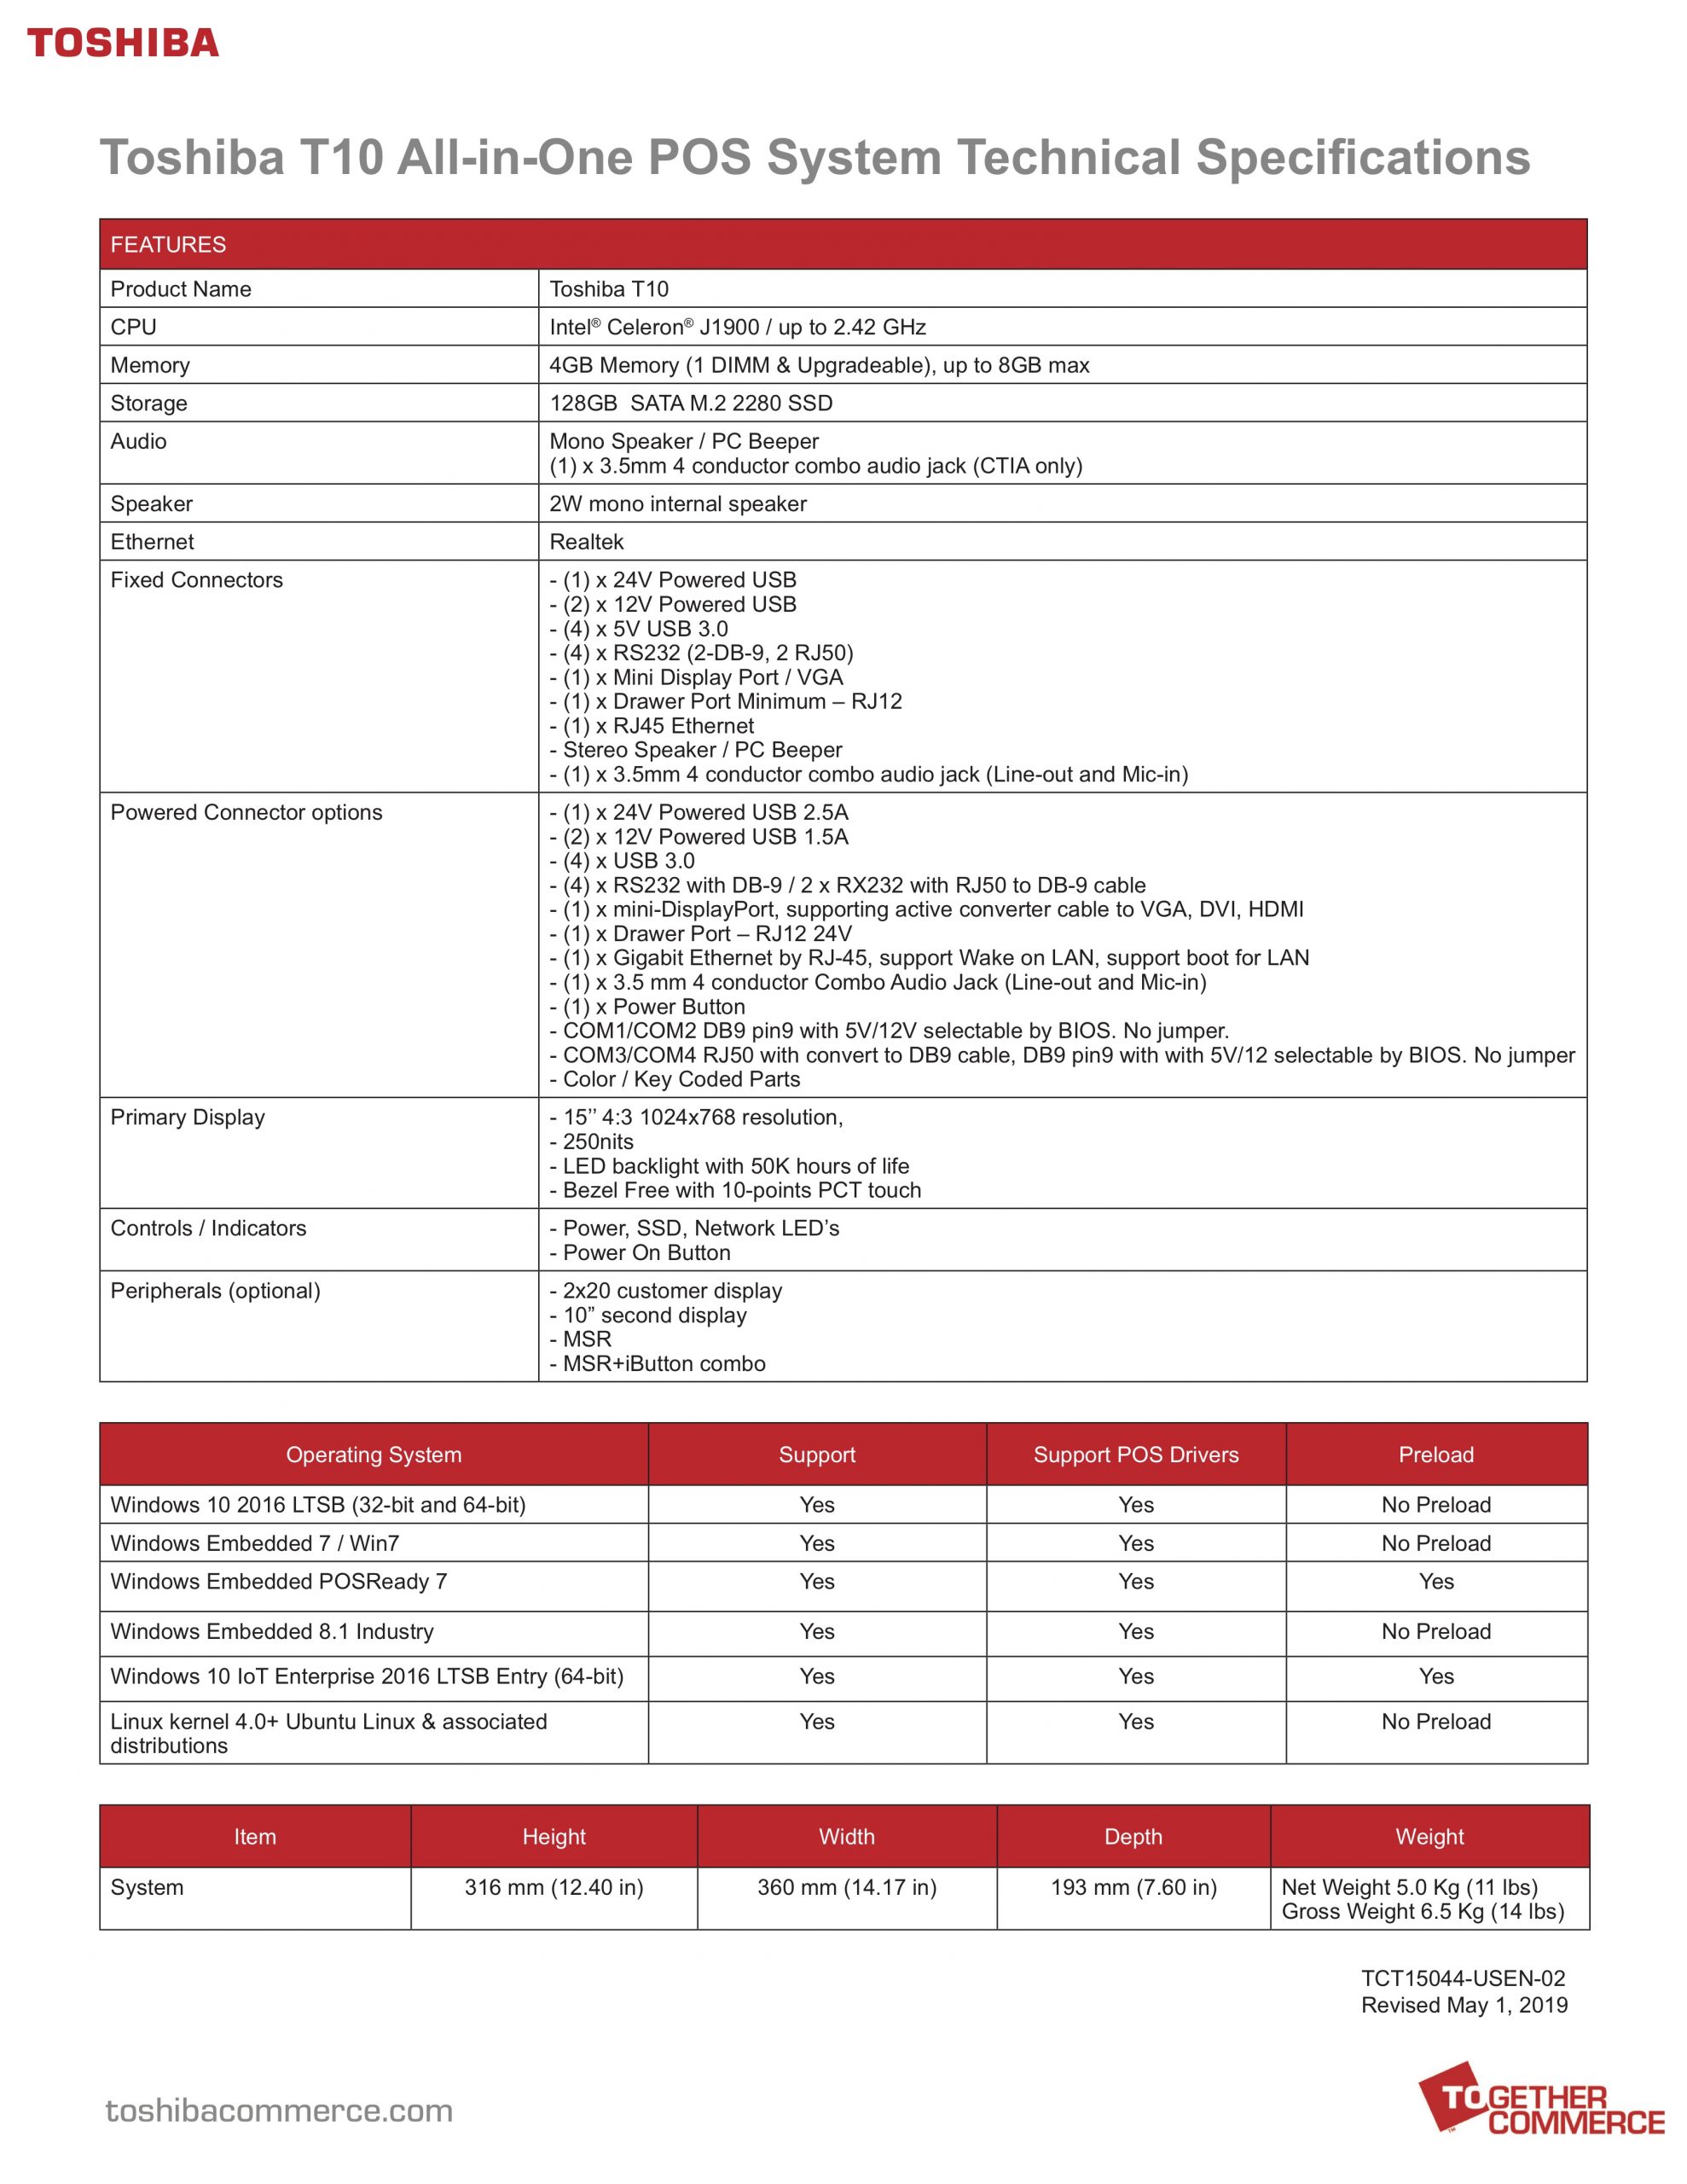 Toshiba T10 Spec Sheet Usen